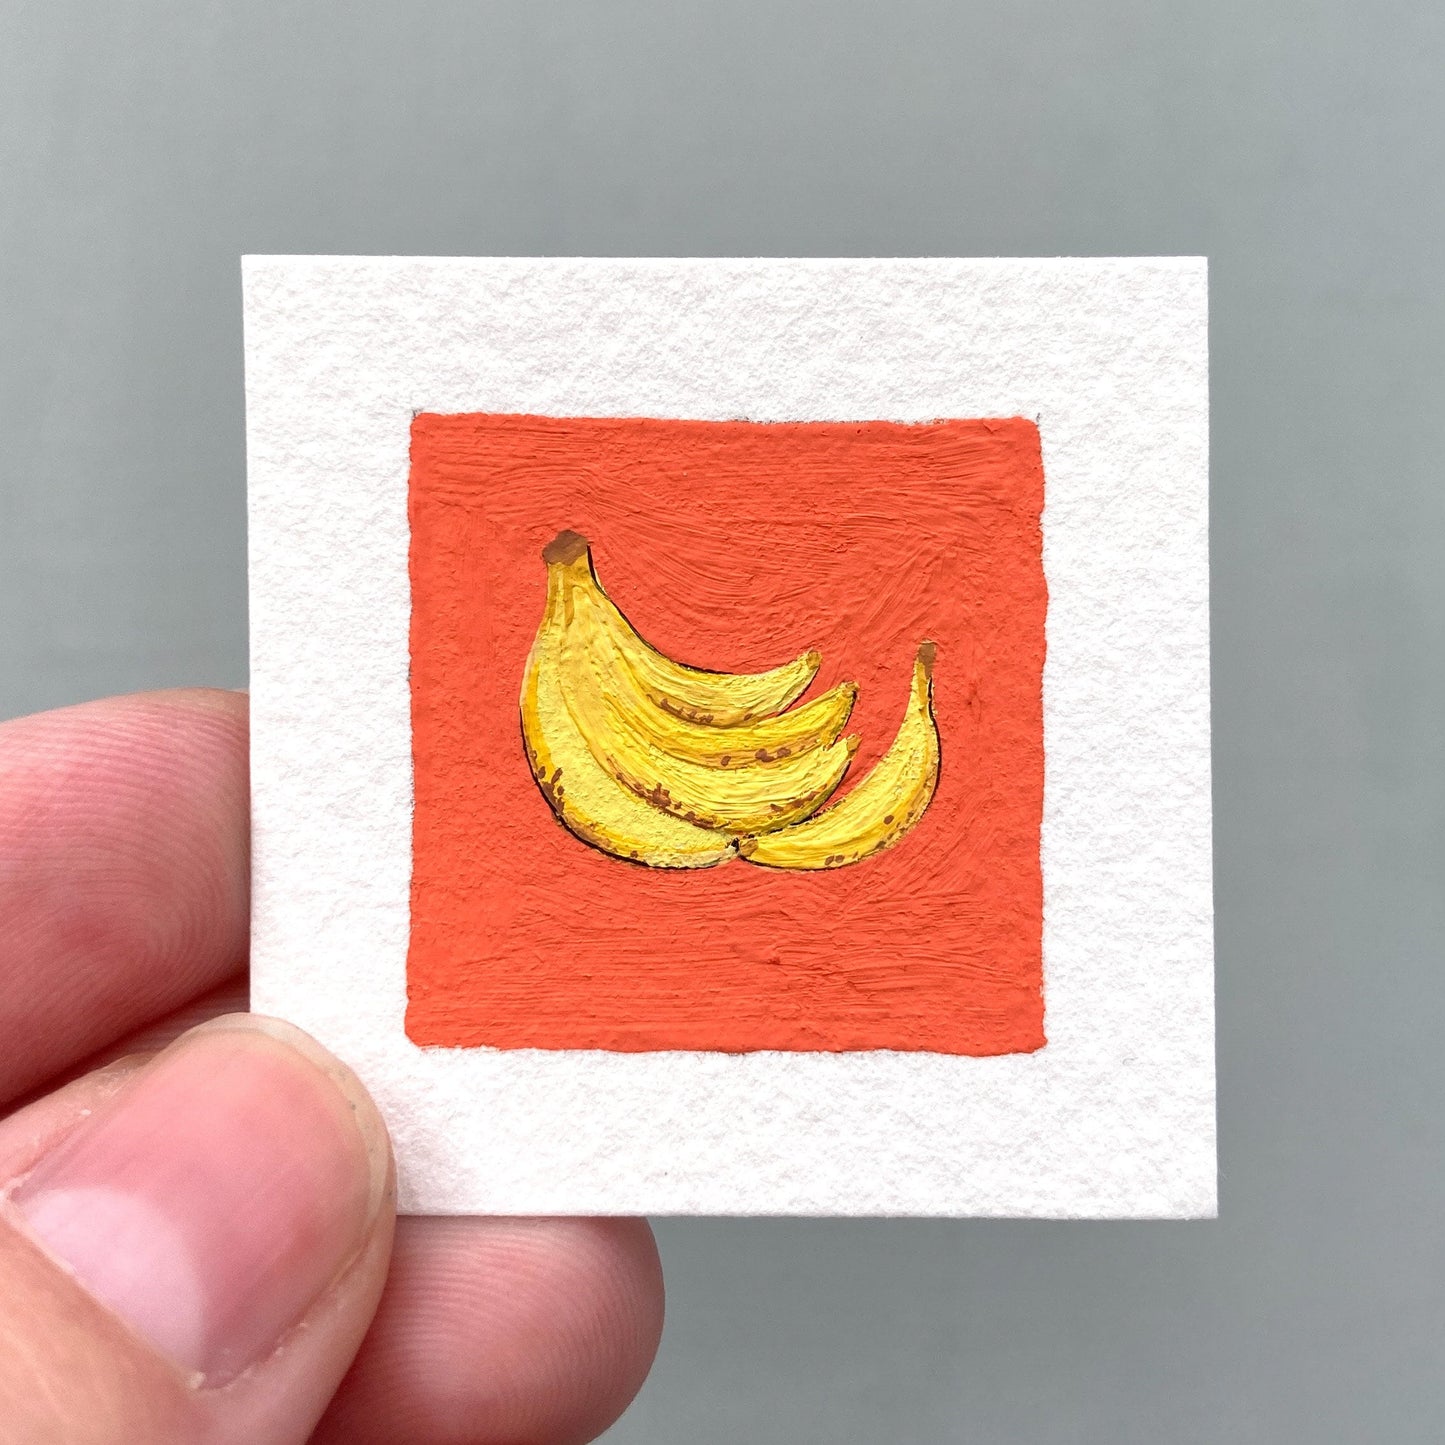 ORIGINAL Mini 1" Banana Gouache Original Painting